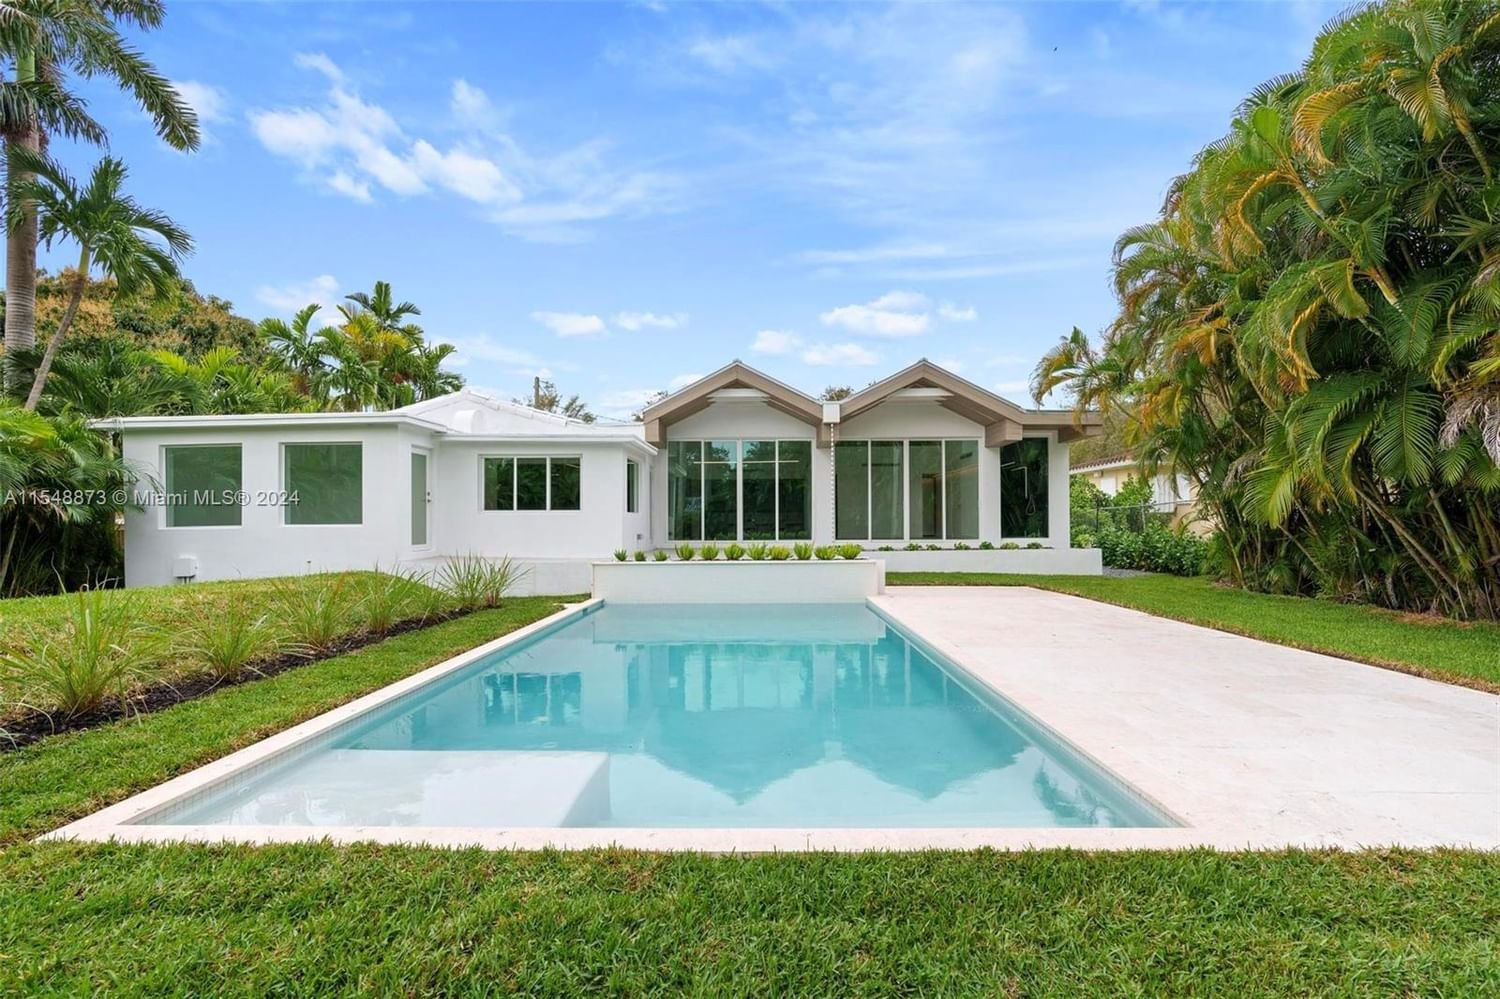 Real estate property located at 8633 Miami Ct, Miami-Dade County, EL PORTAL SEC 6, El Portal, FL